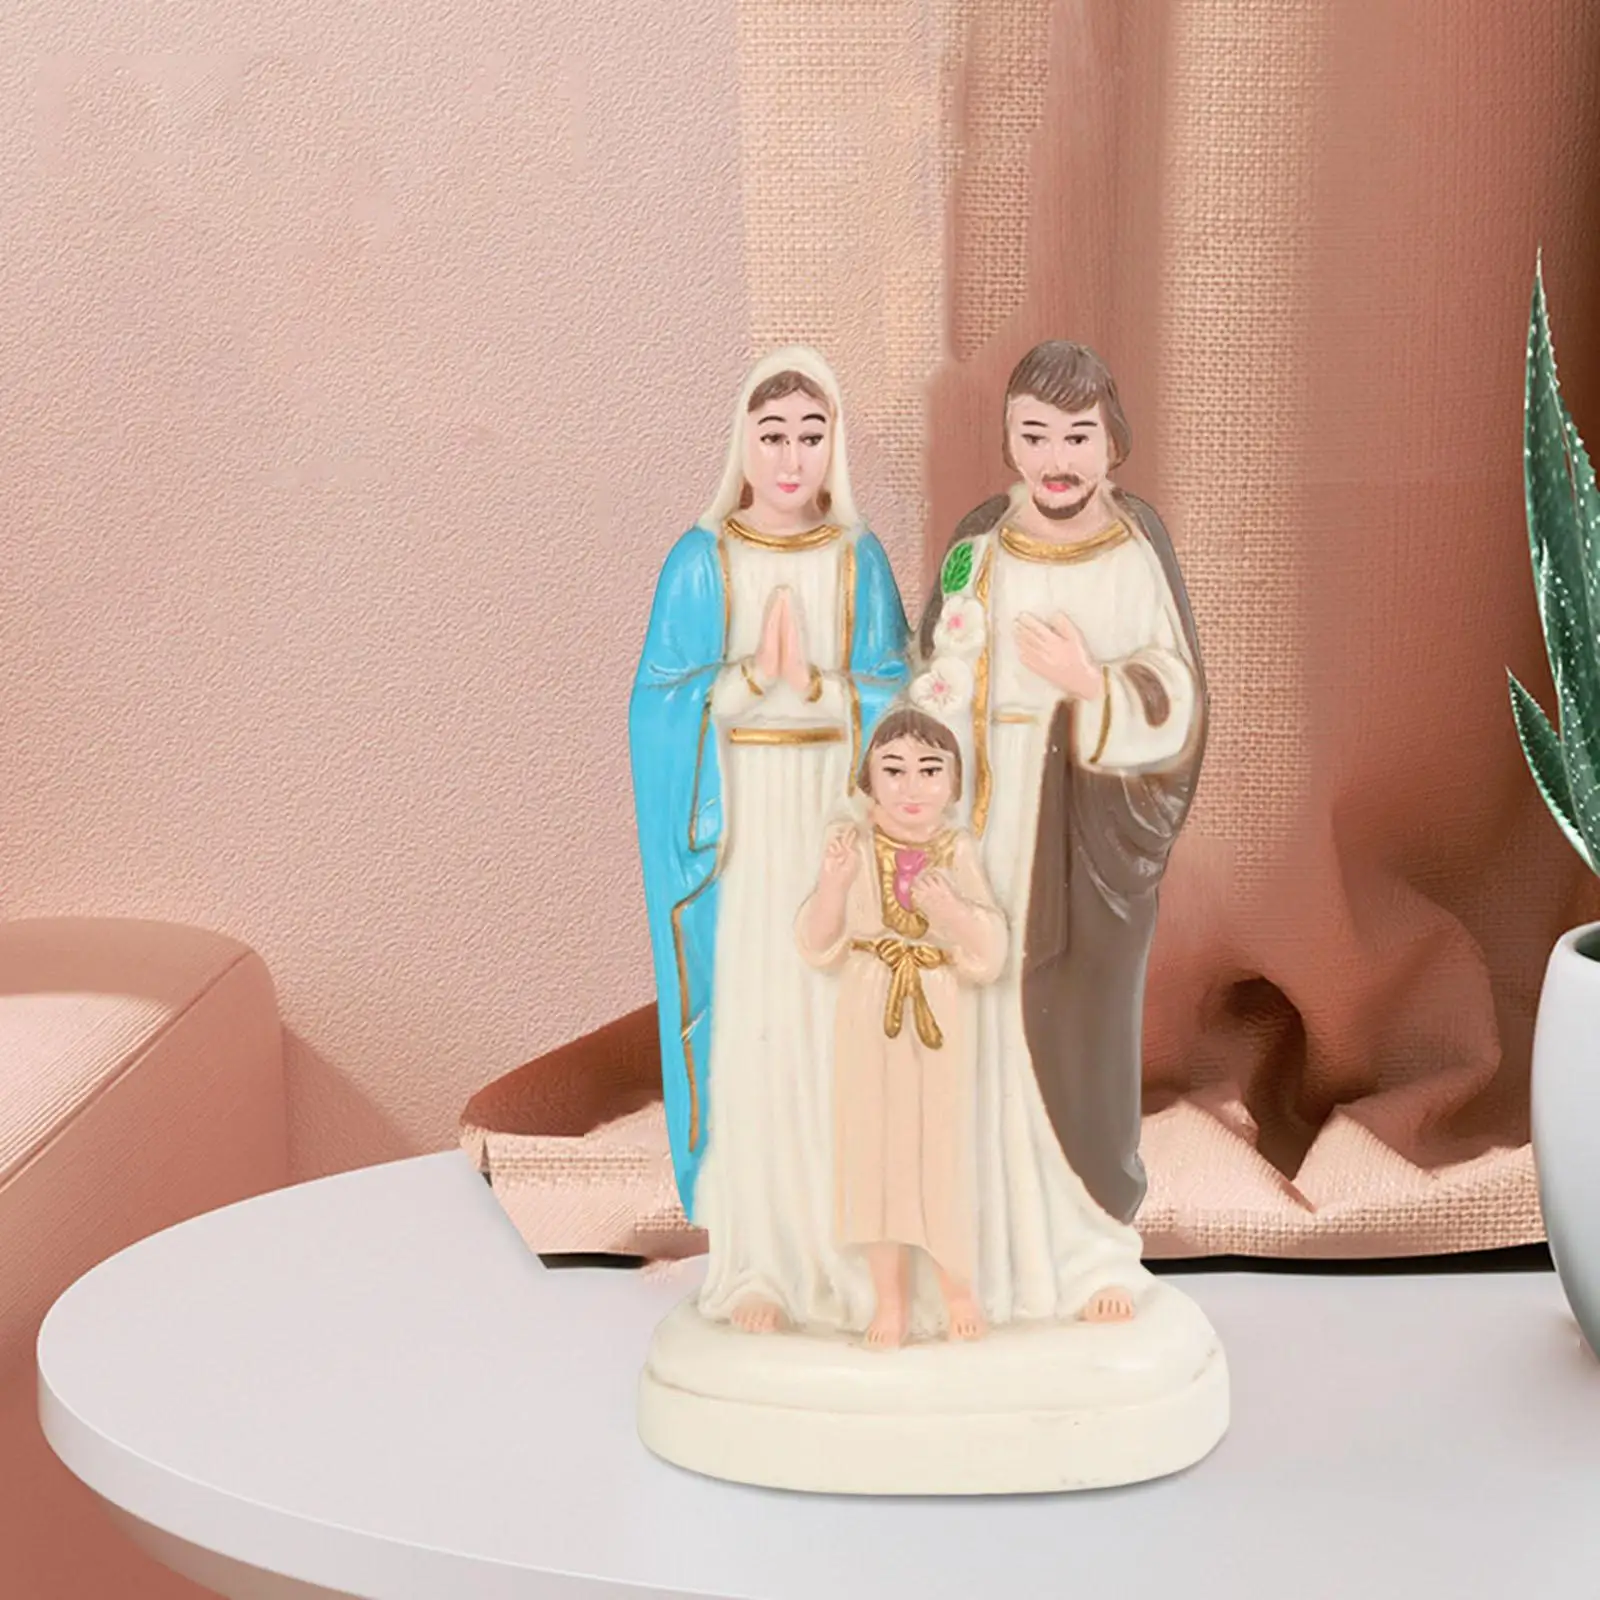 Holy Family Statue Religious Figurine Life of Christ Jesus Mary Joseph Home Decor Gift Ornament for Church Office Desktop